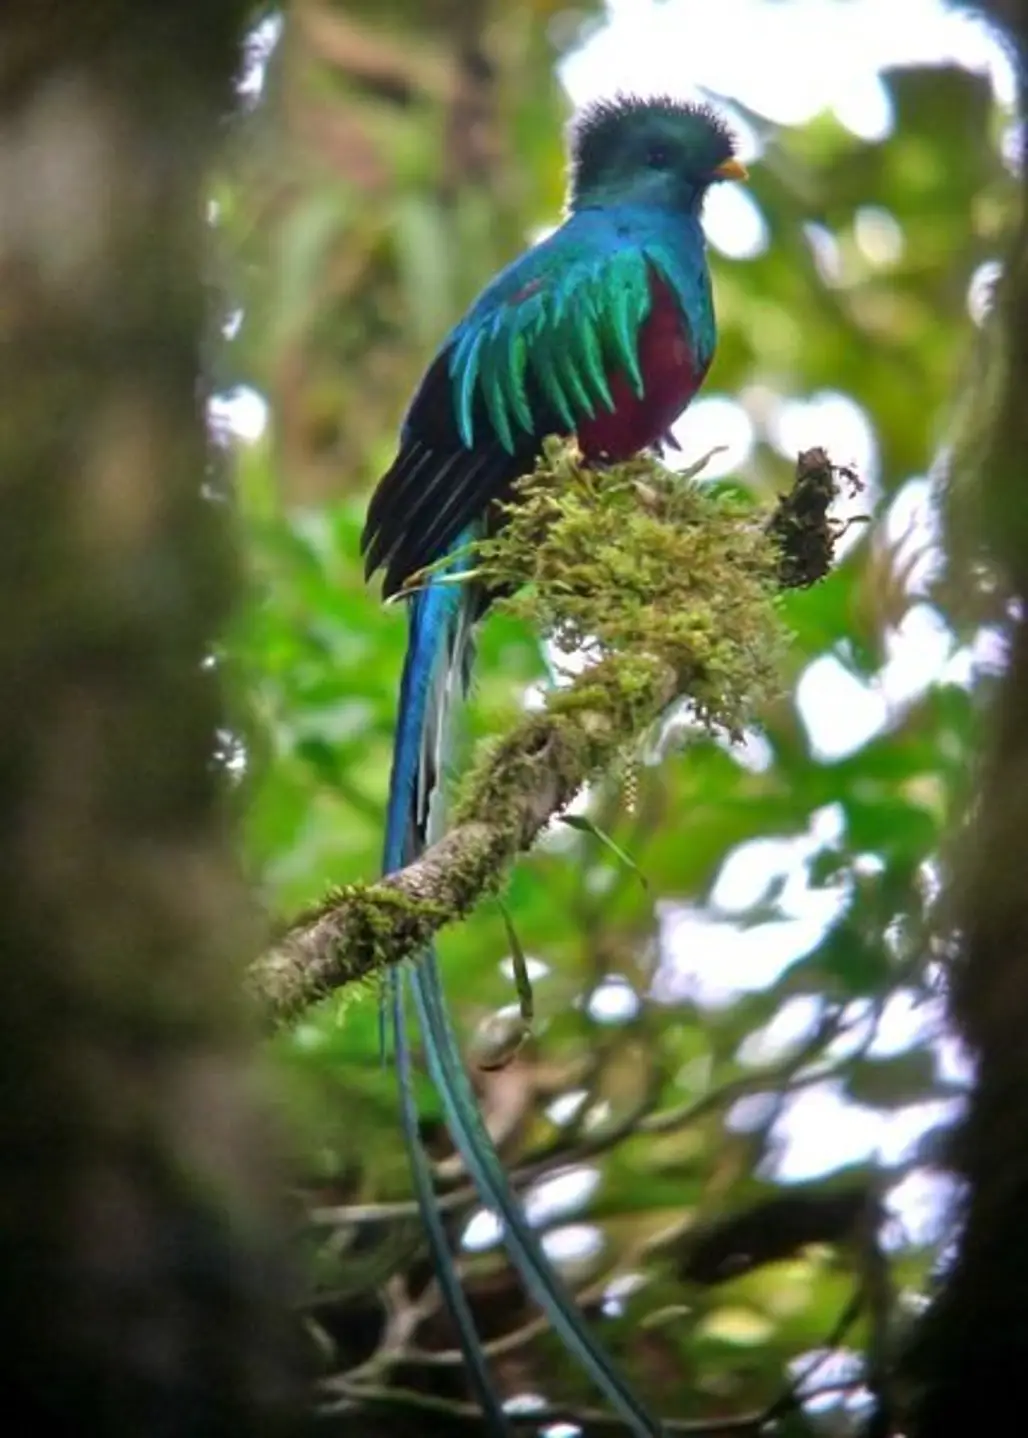 Monteverde Cloud Forest Reserve (Reserva Biológica Bosque Nuboso Monteverde), Costa Rica